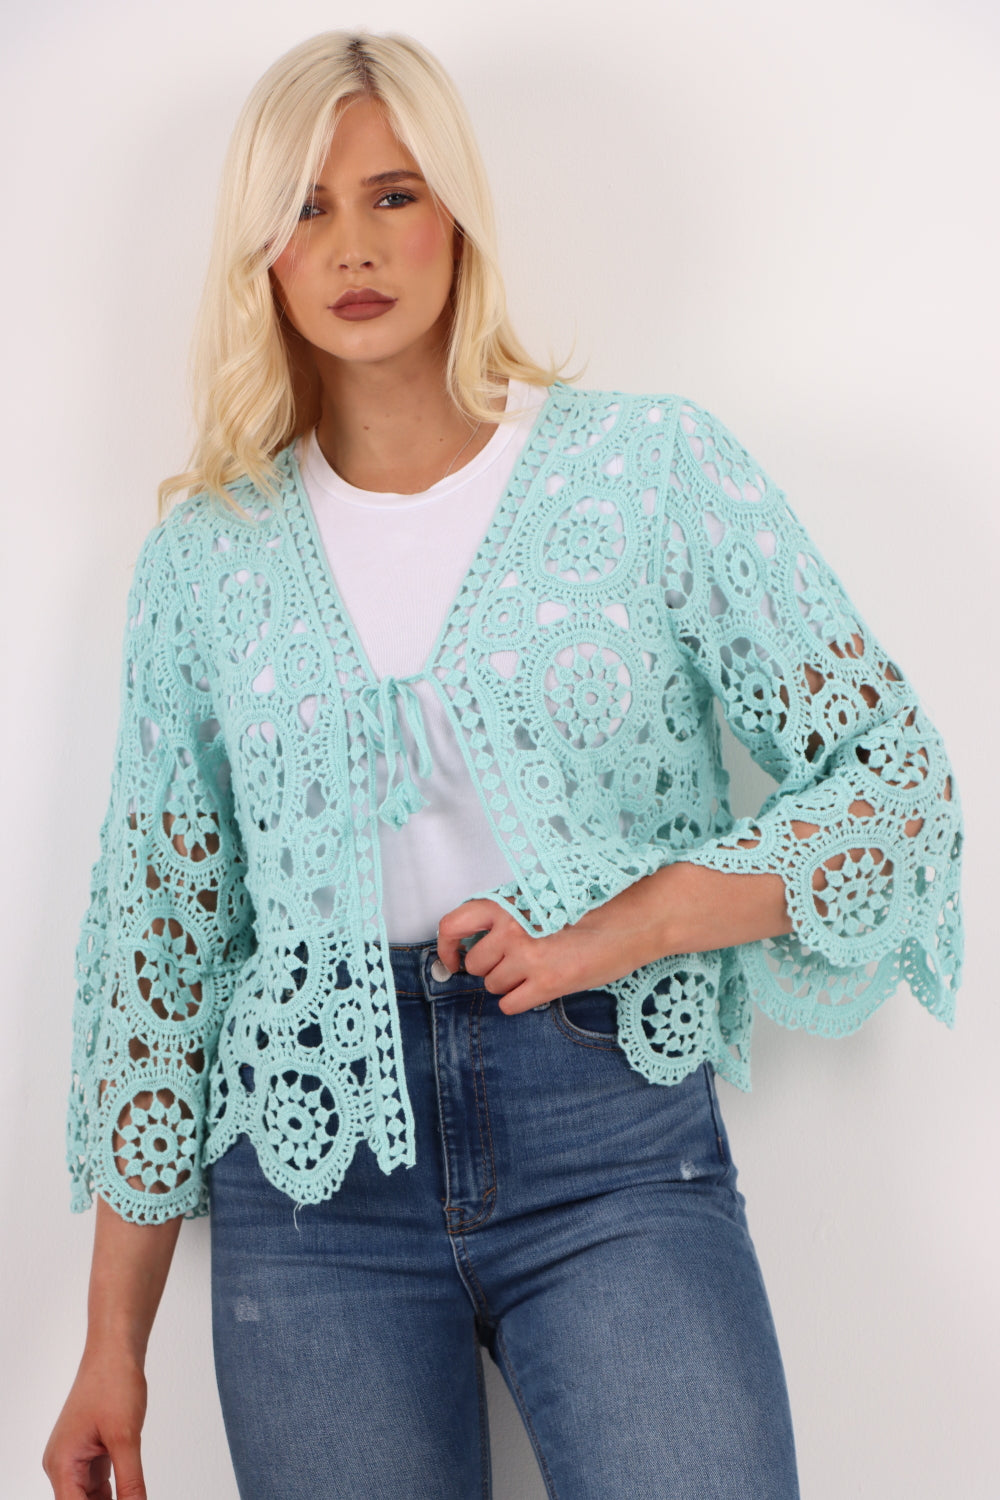 Italian Crochet Lace Shrug Pattern Tie Front Cardigan